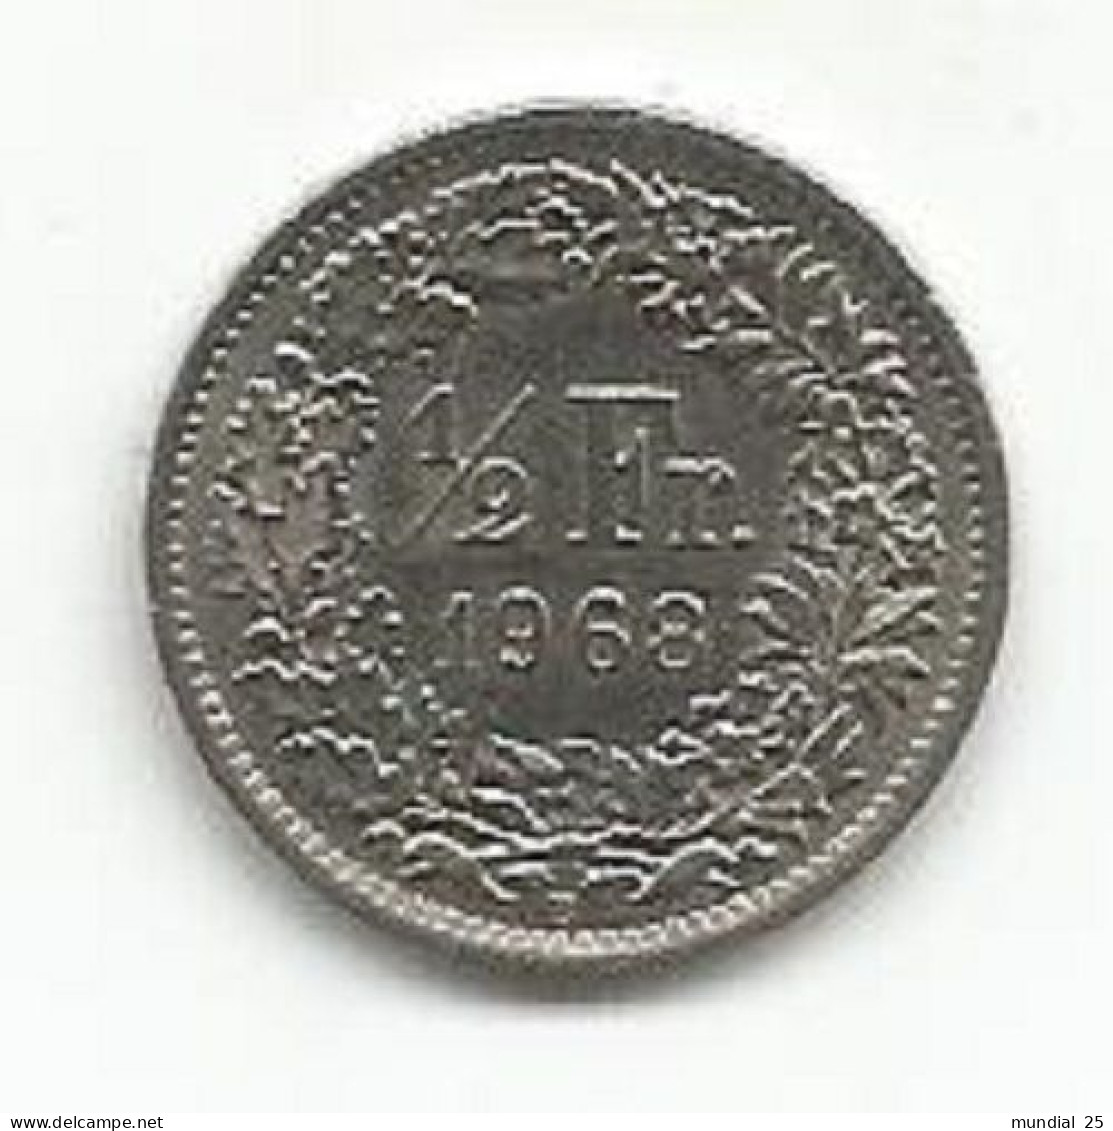 SWITZERLAND 1/2 FRANC 1968 B - 1/2 Franken